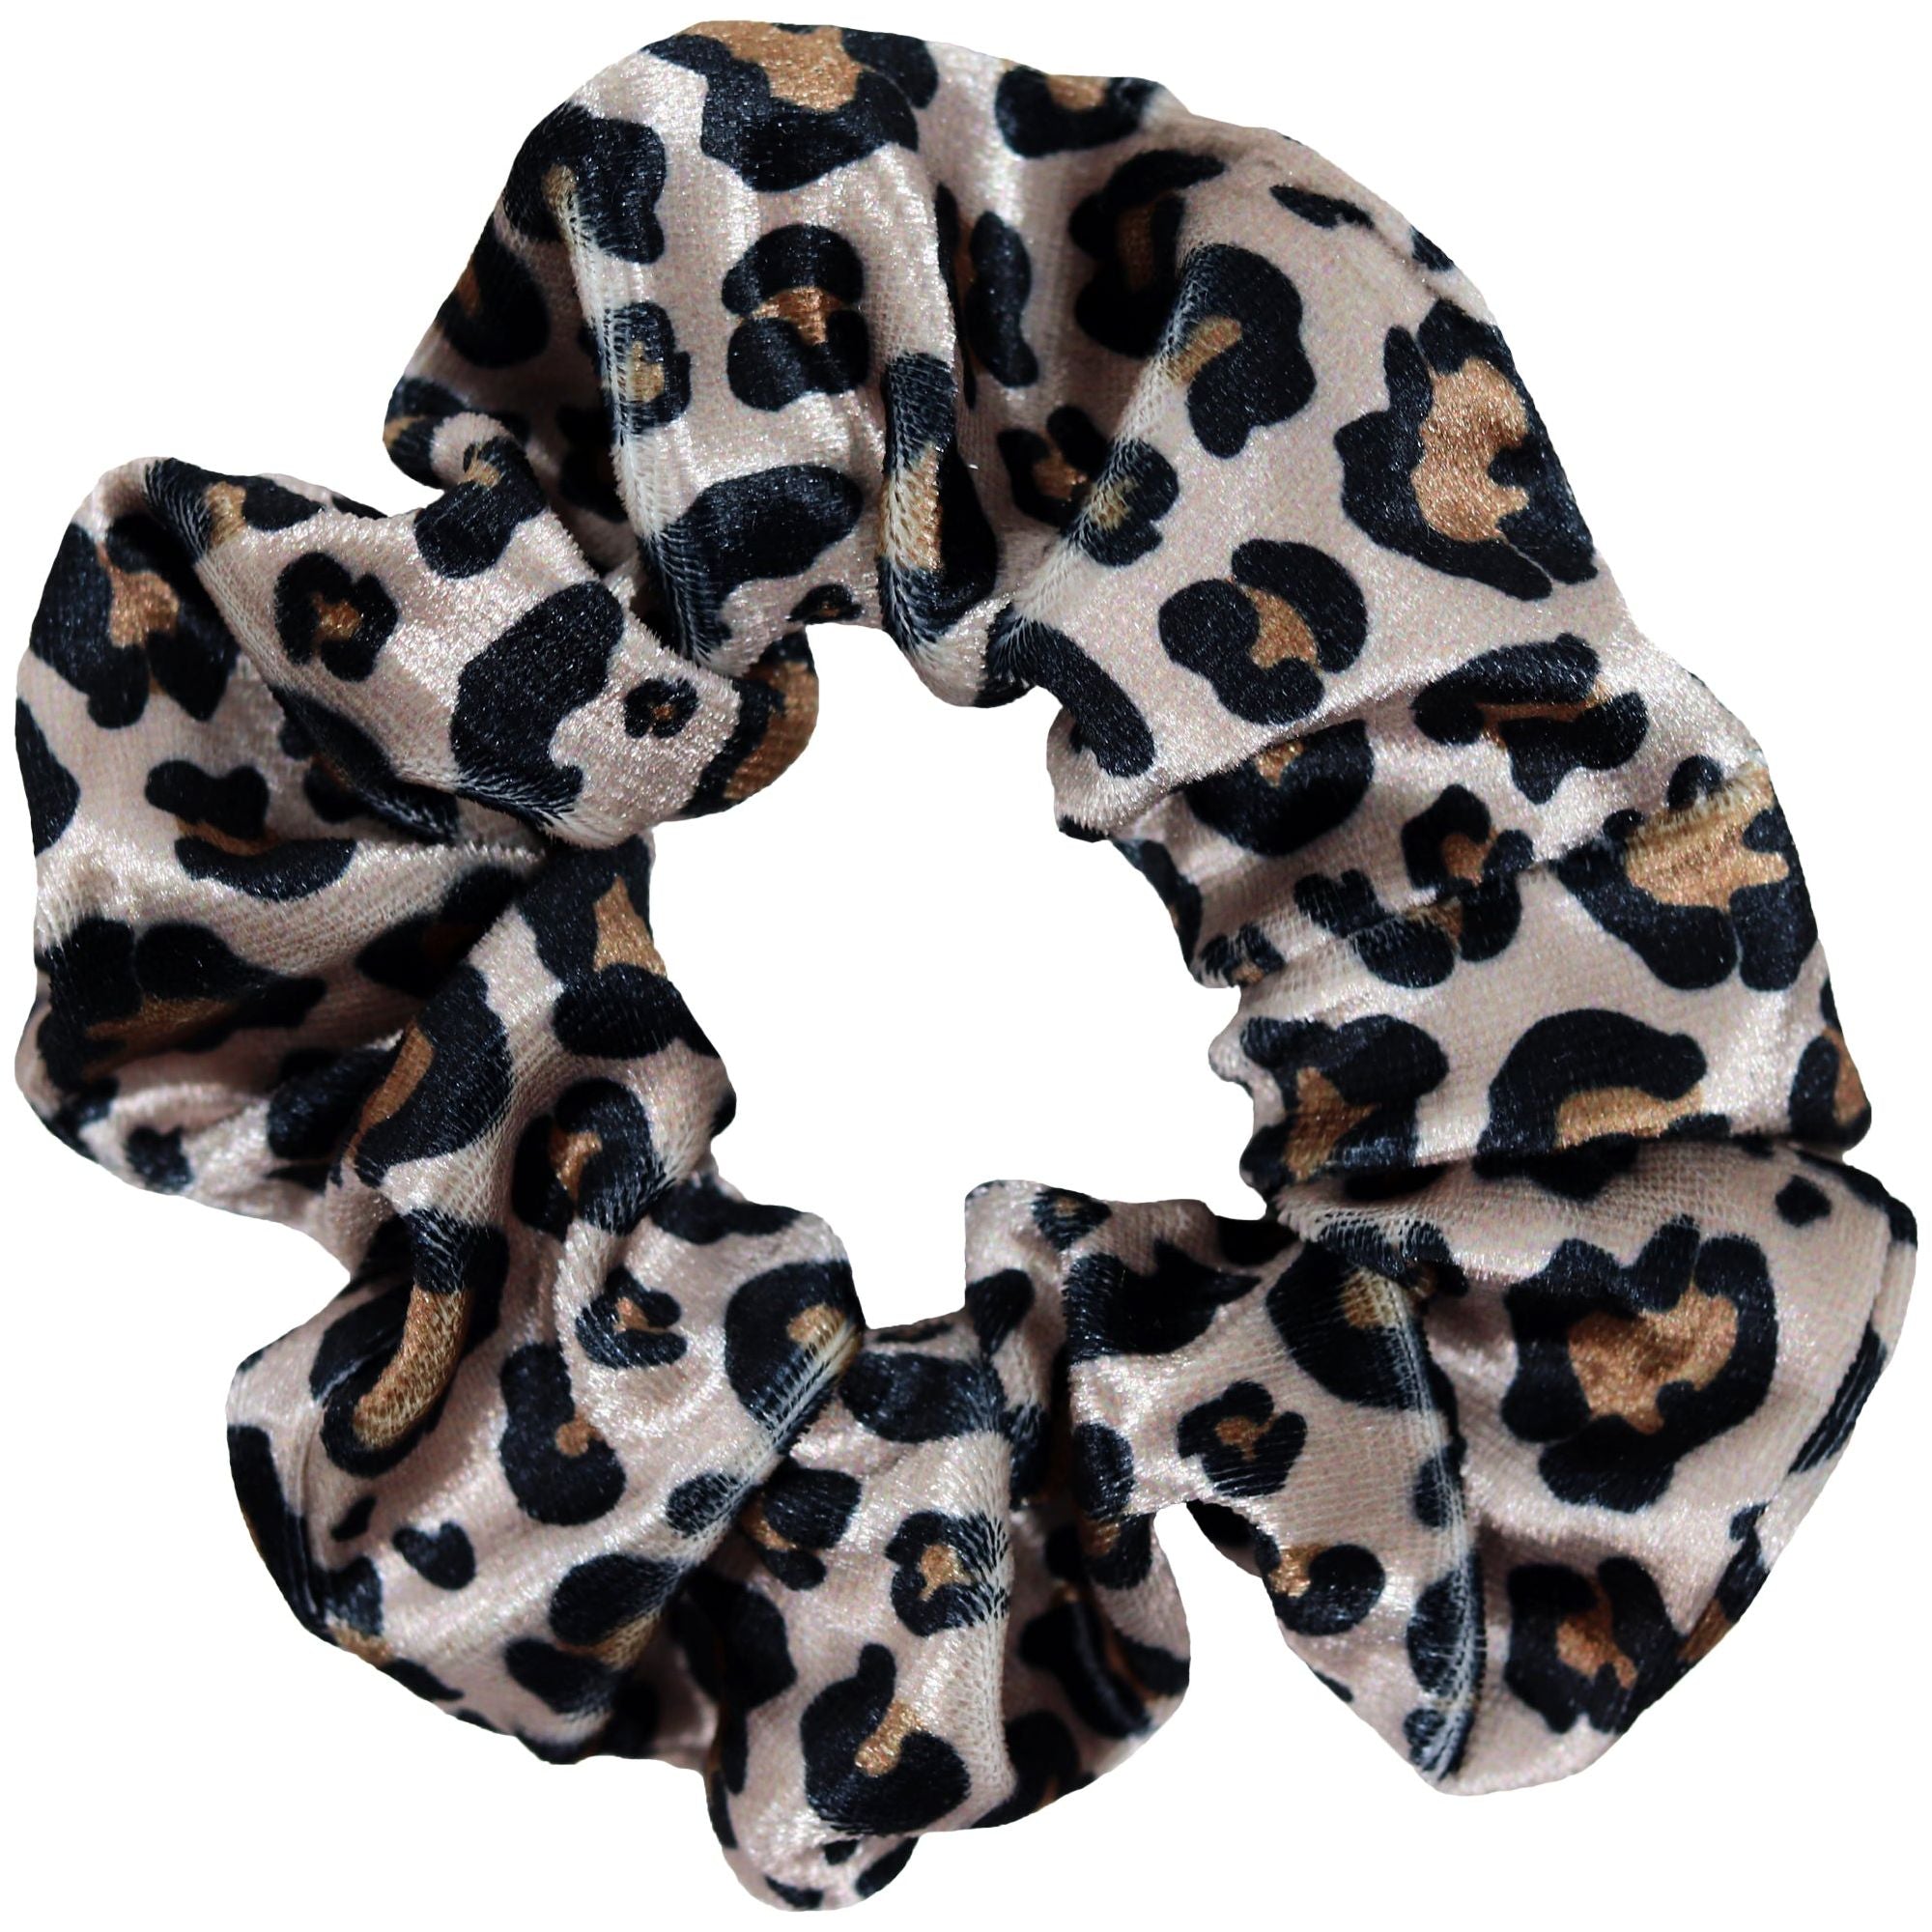 Beige Animal Print Scrunchie, Cheetah Scrunchie, Leopard Print Scrunchie,  Black Cream Pink, Hair Tie Scrunchy, Cotton Hair Accessory -  Canada